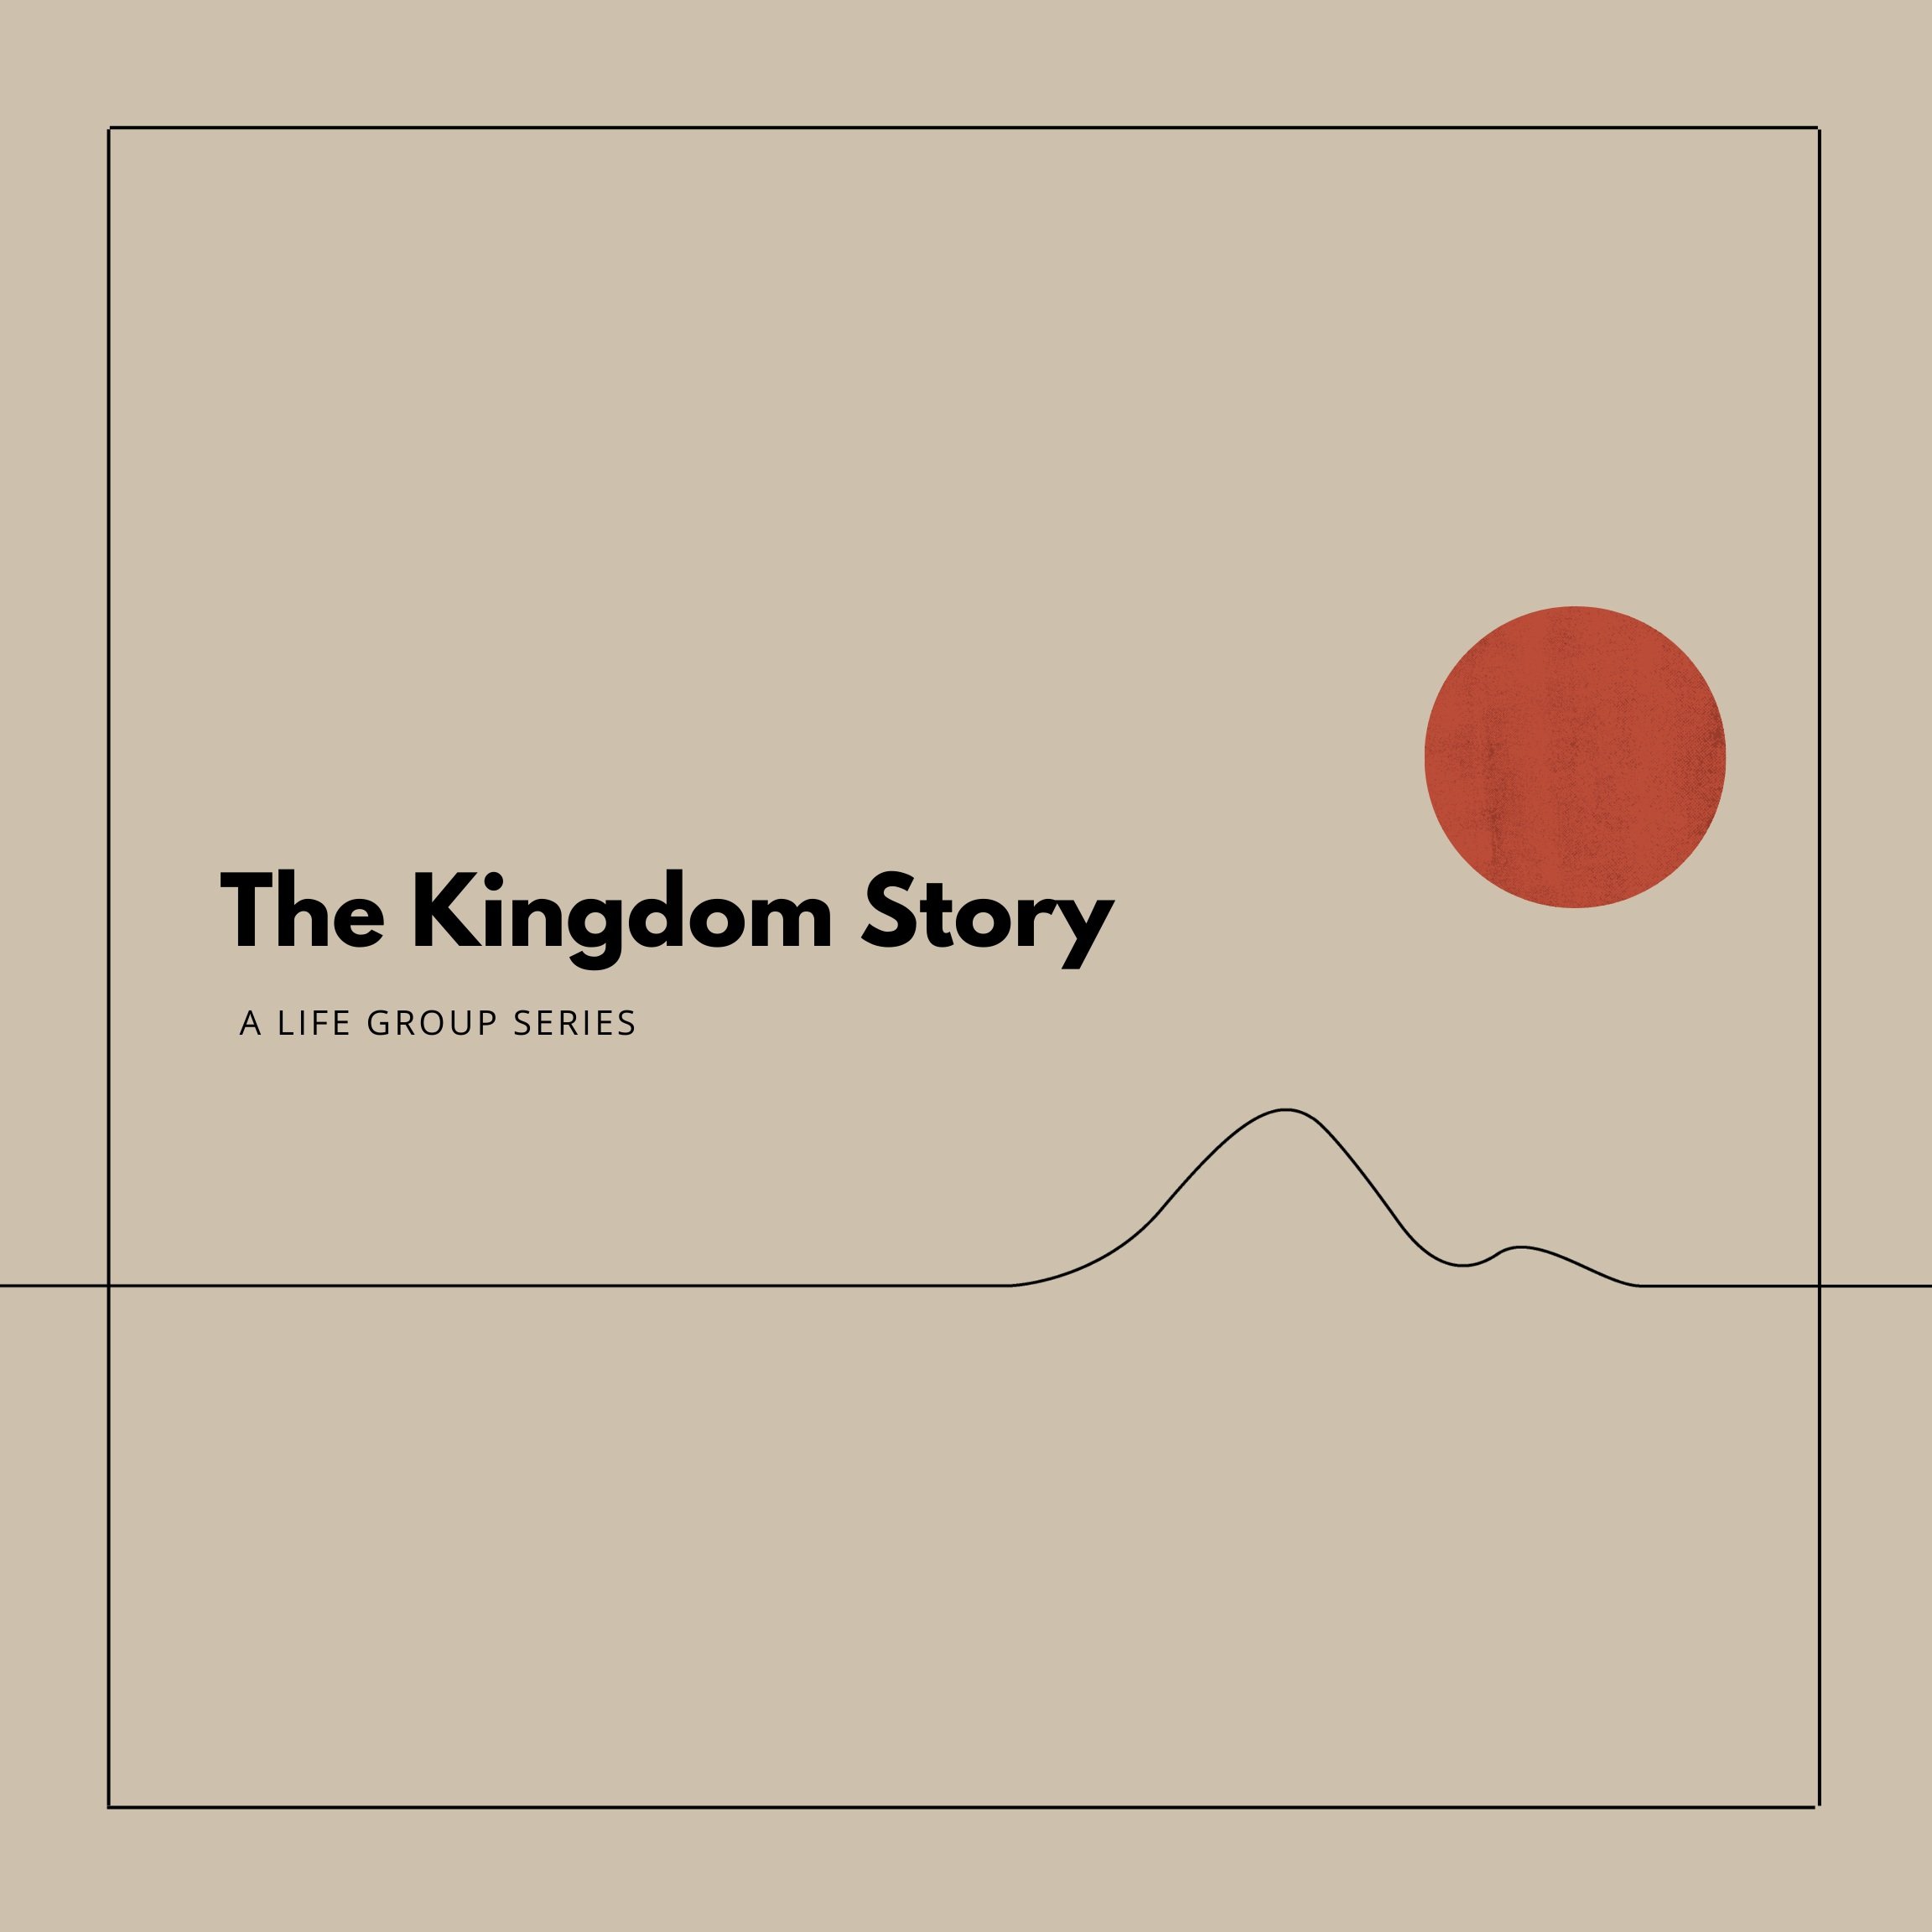 The Kingdom Story